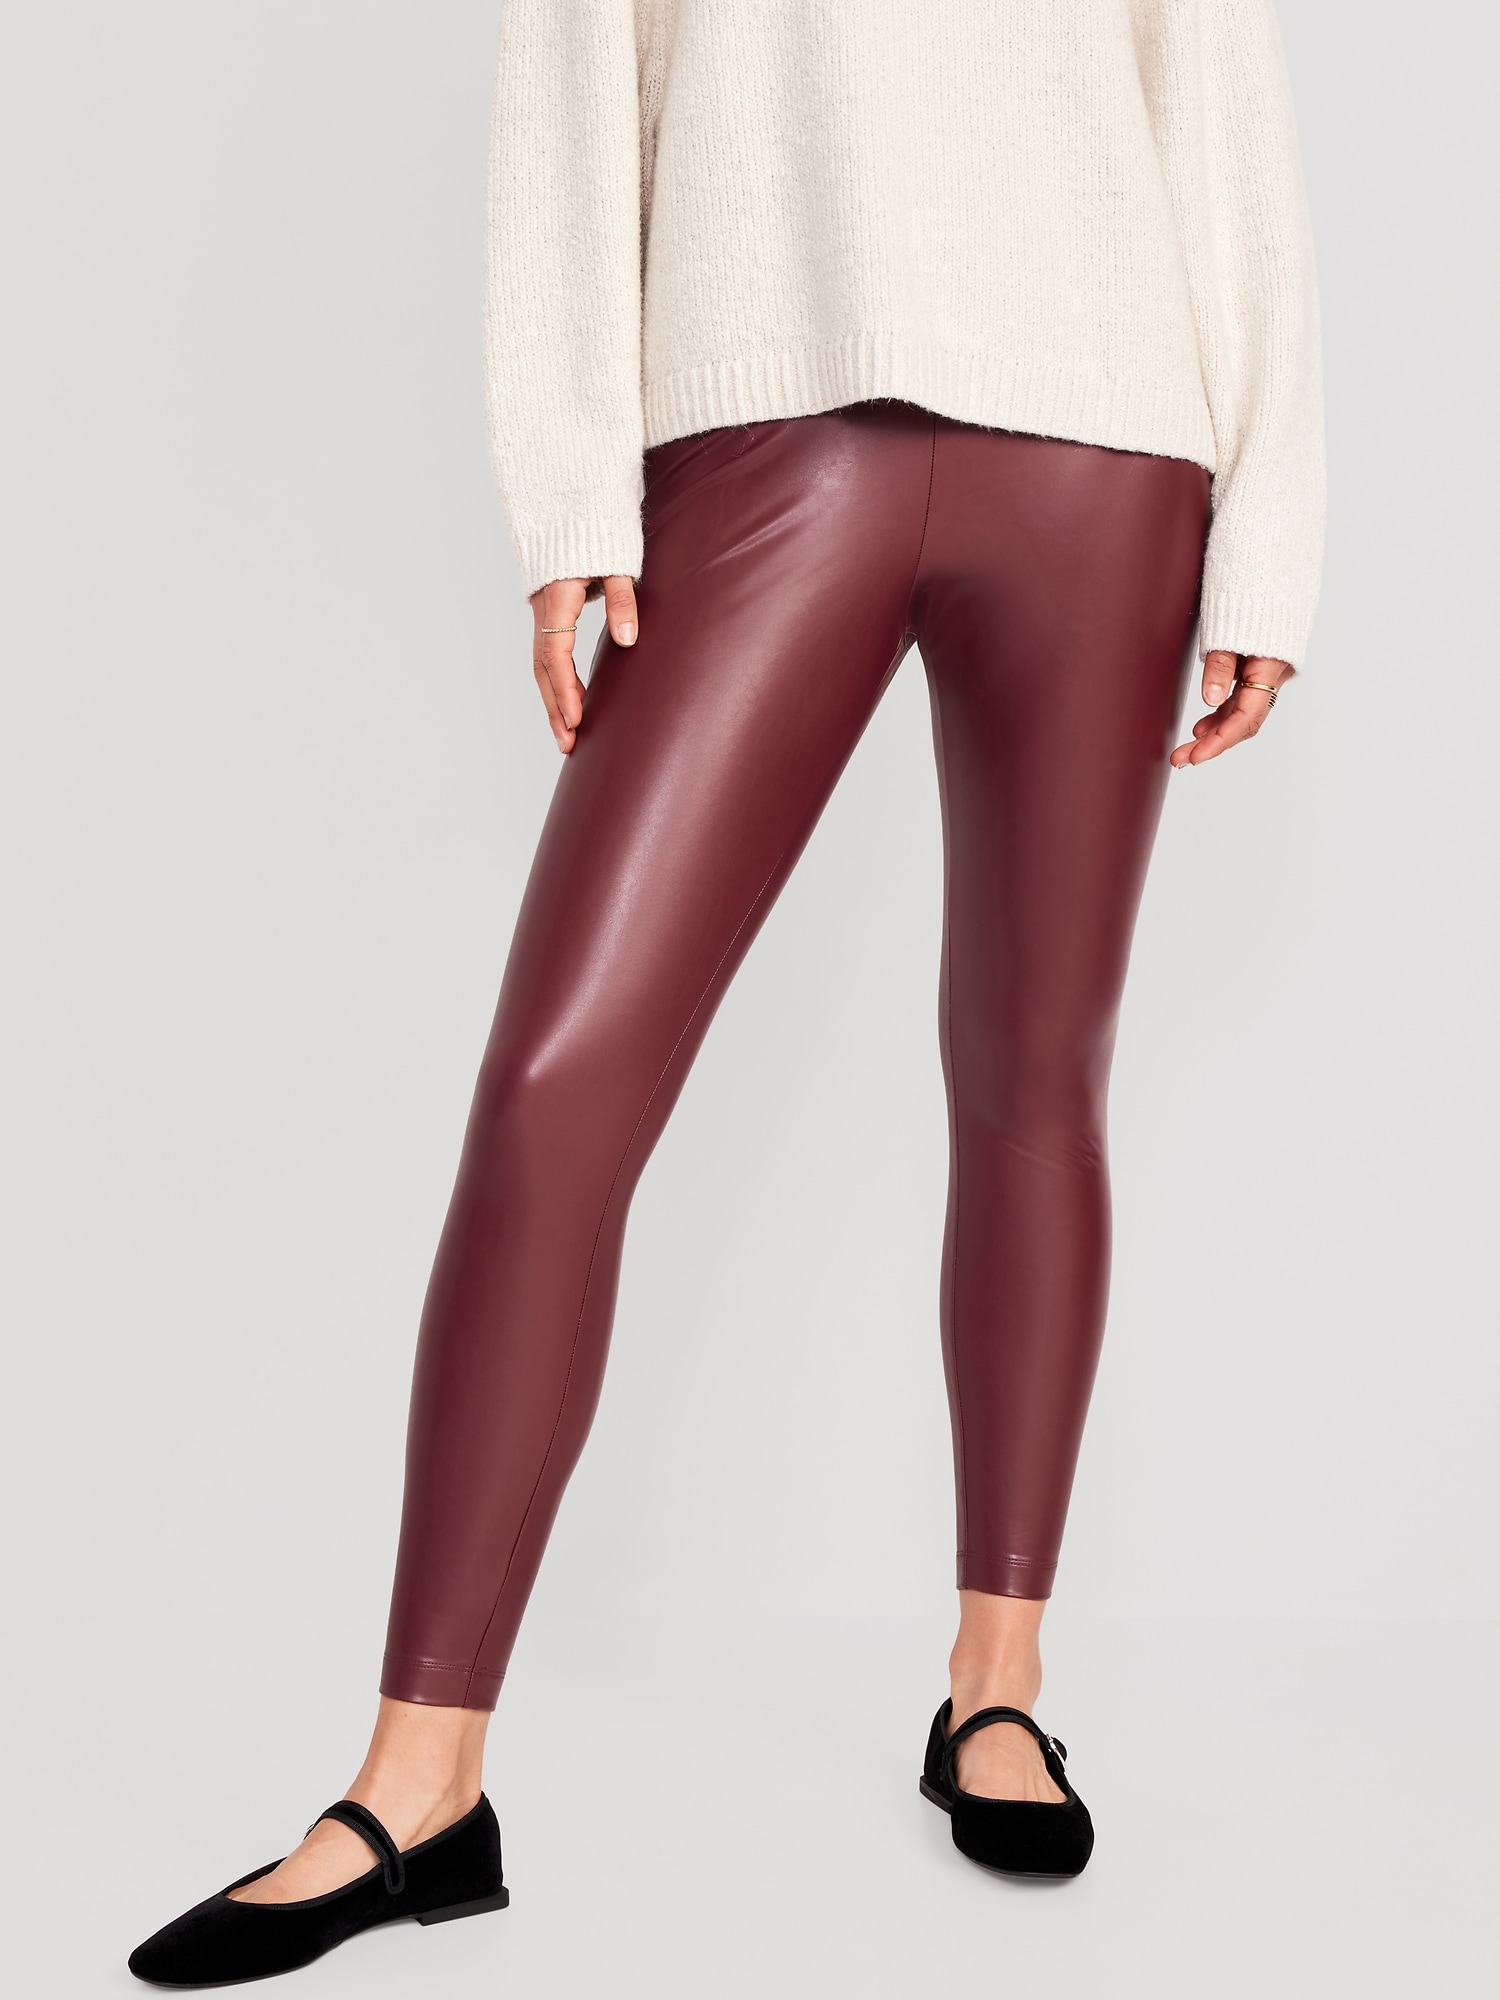 Old Navy, Pants & Jumpsuits, Old Navy Active Leggings Cranberry Burgundy  Shimmer Glitter Sparkle Size Medium